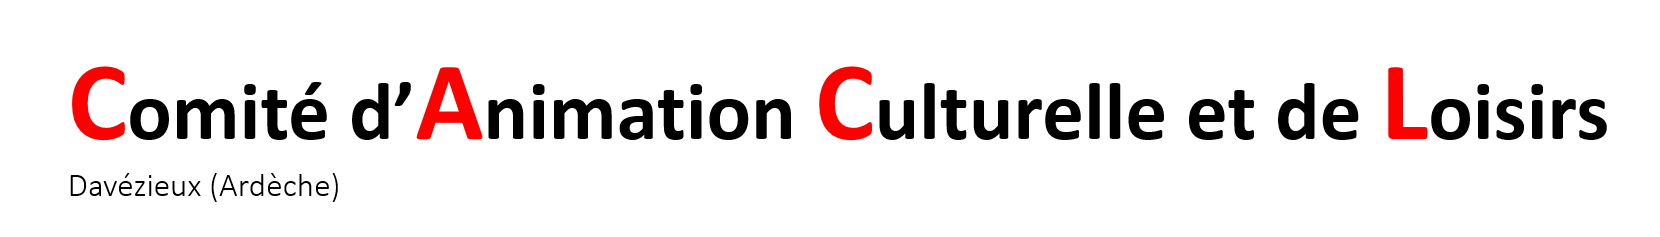 Logo piedpage cl01